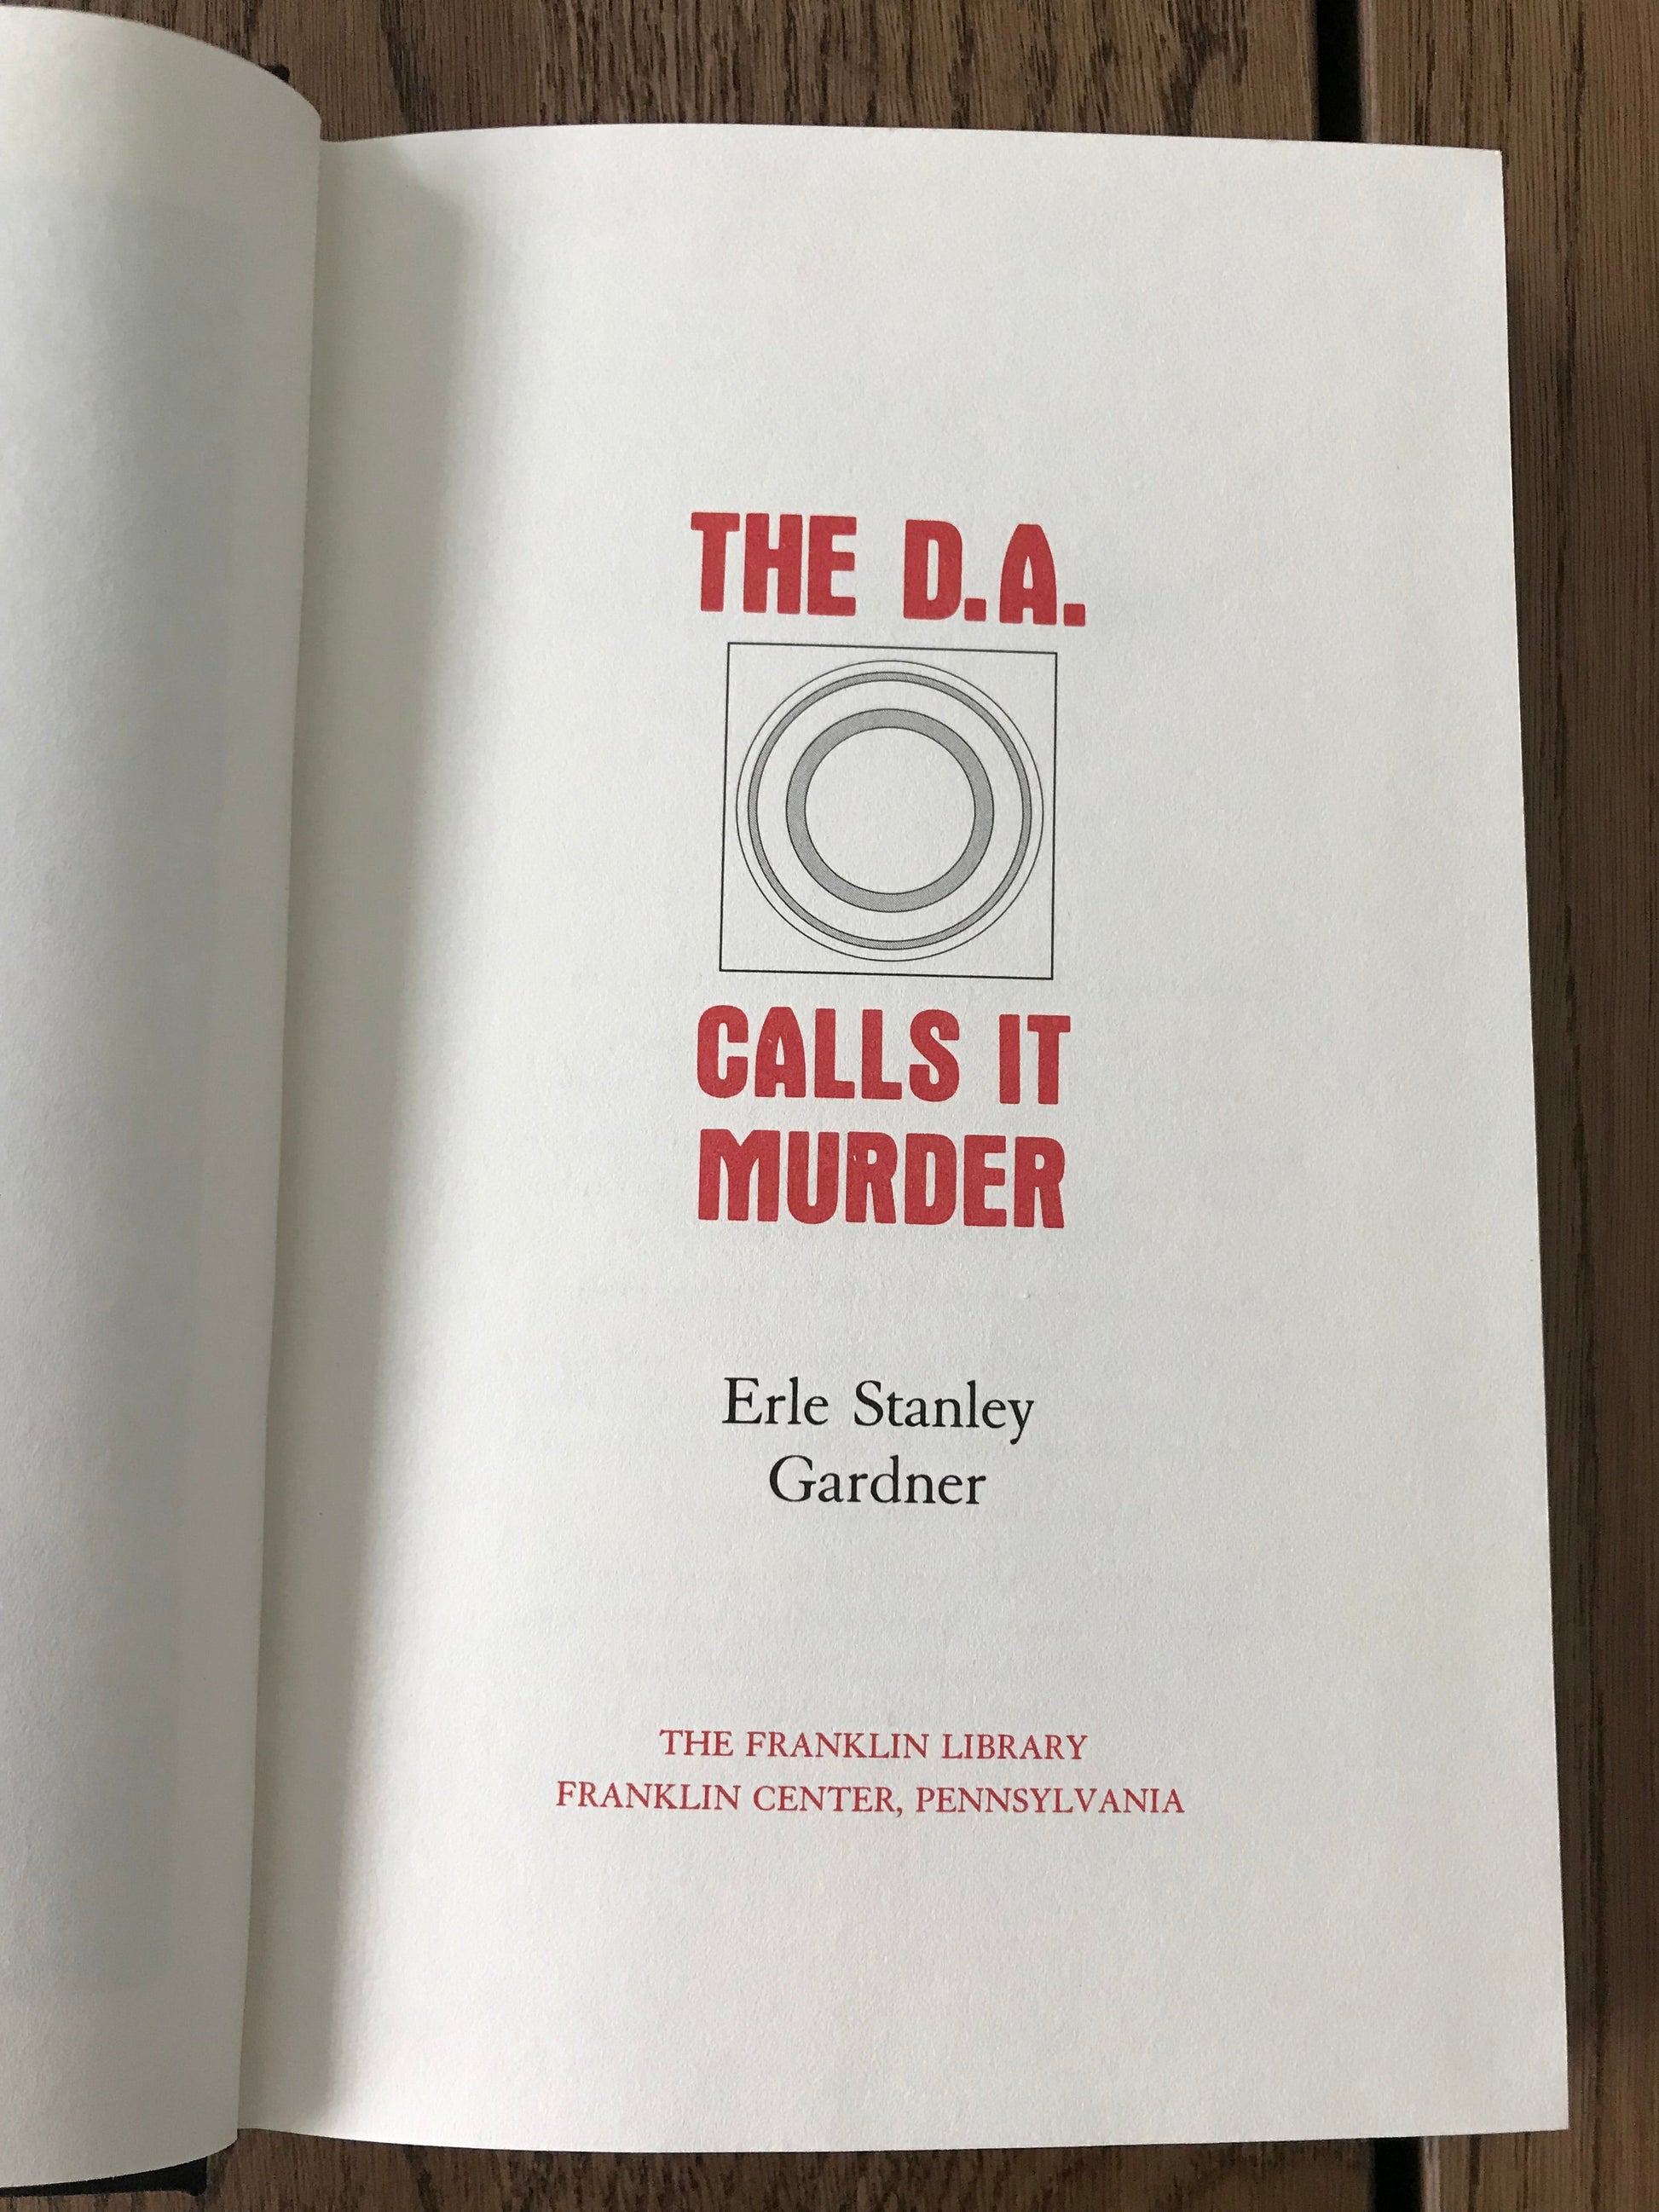 THE D.A. CALLS IT MURDER - ERLE STANLEY GARDNER BooksCardsNBikes